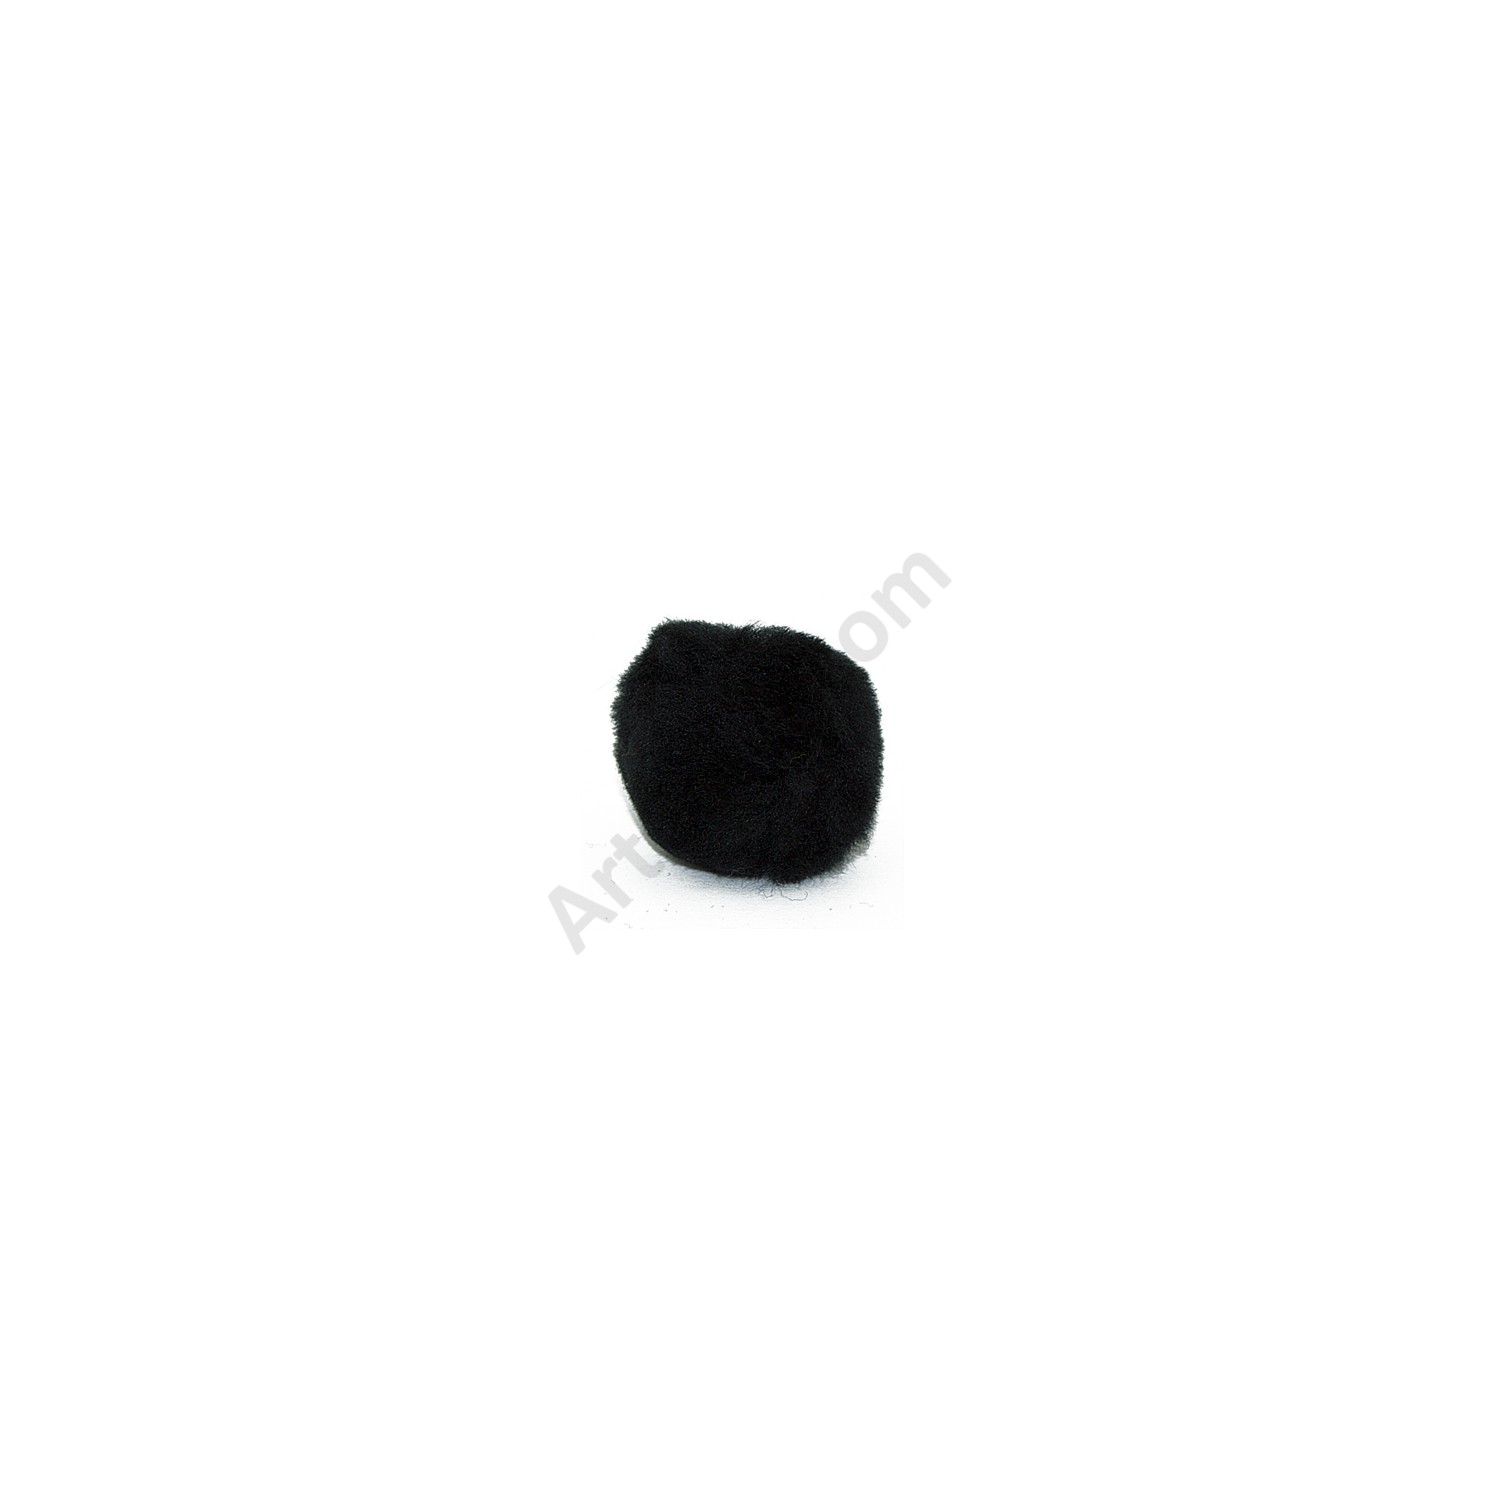 1 inch Black Small Craft Pom Poms 100 Pieces